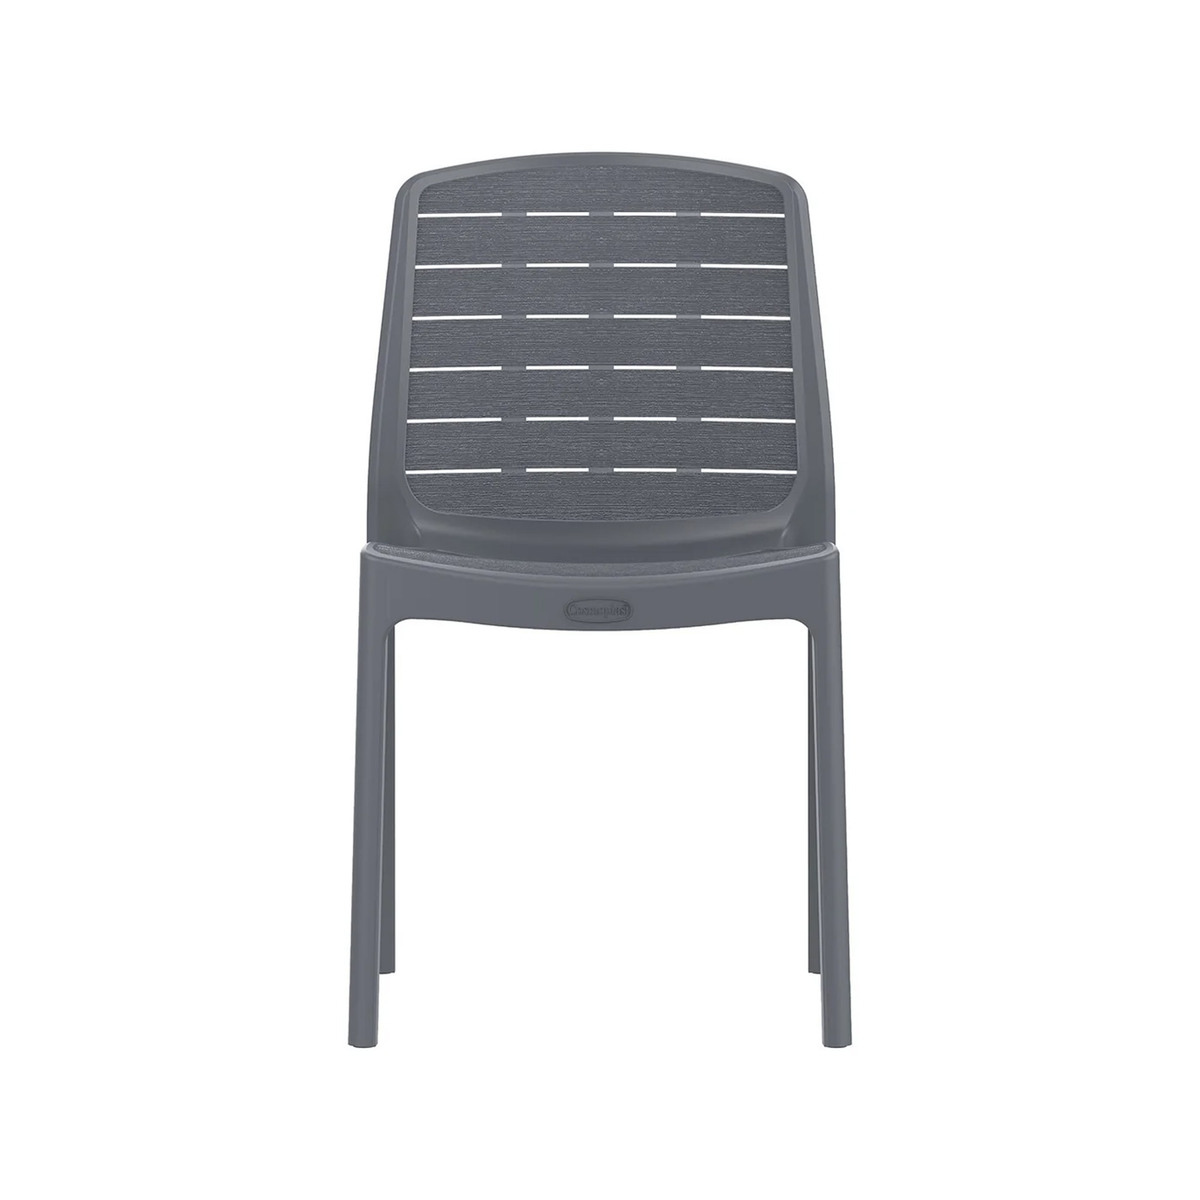 Cosmoplast Cedargrain Armless Chair IFOFXX007 Dark Grey